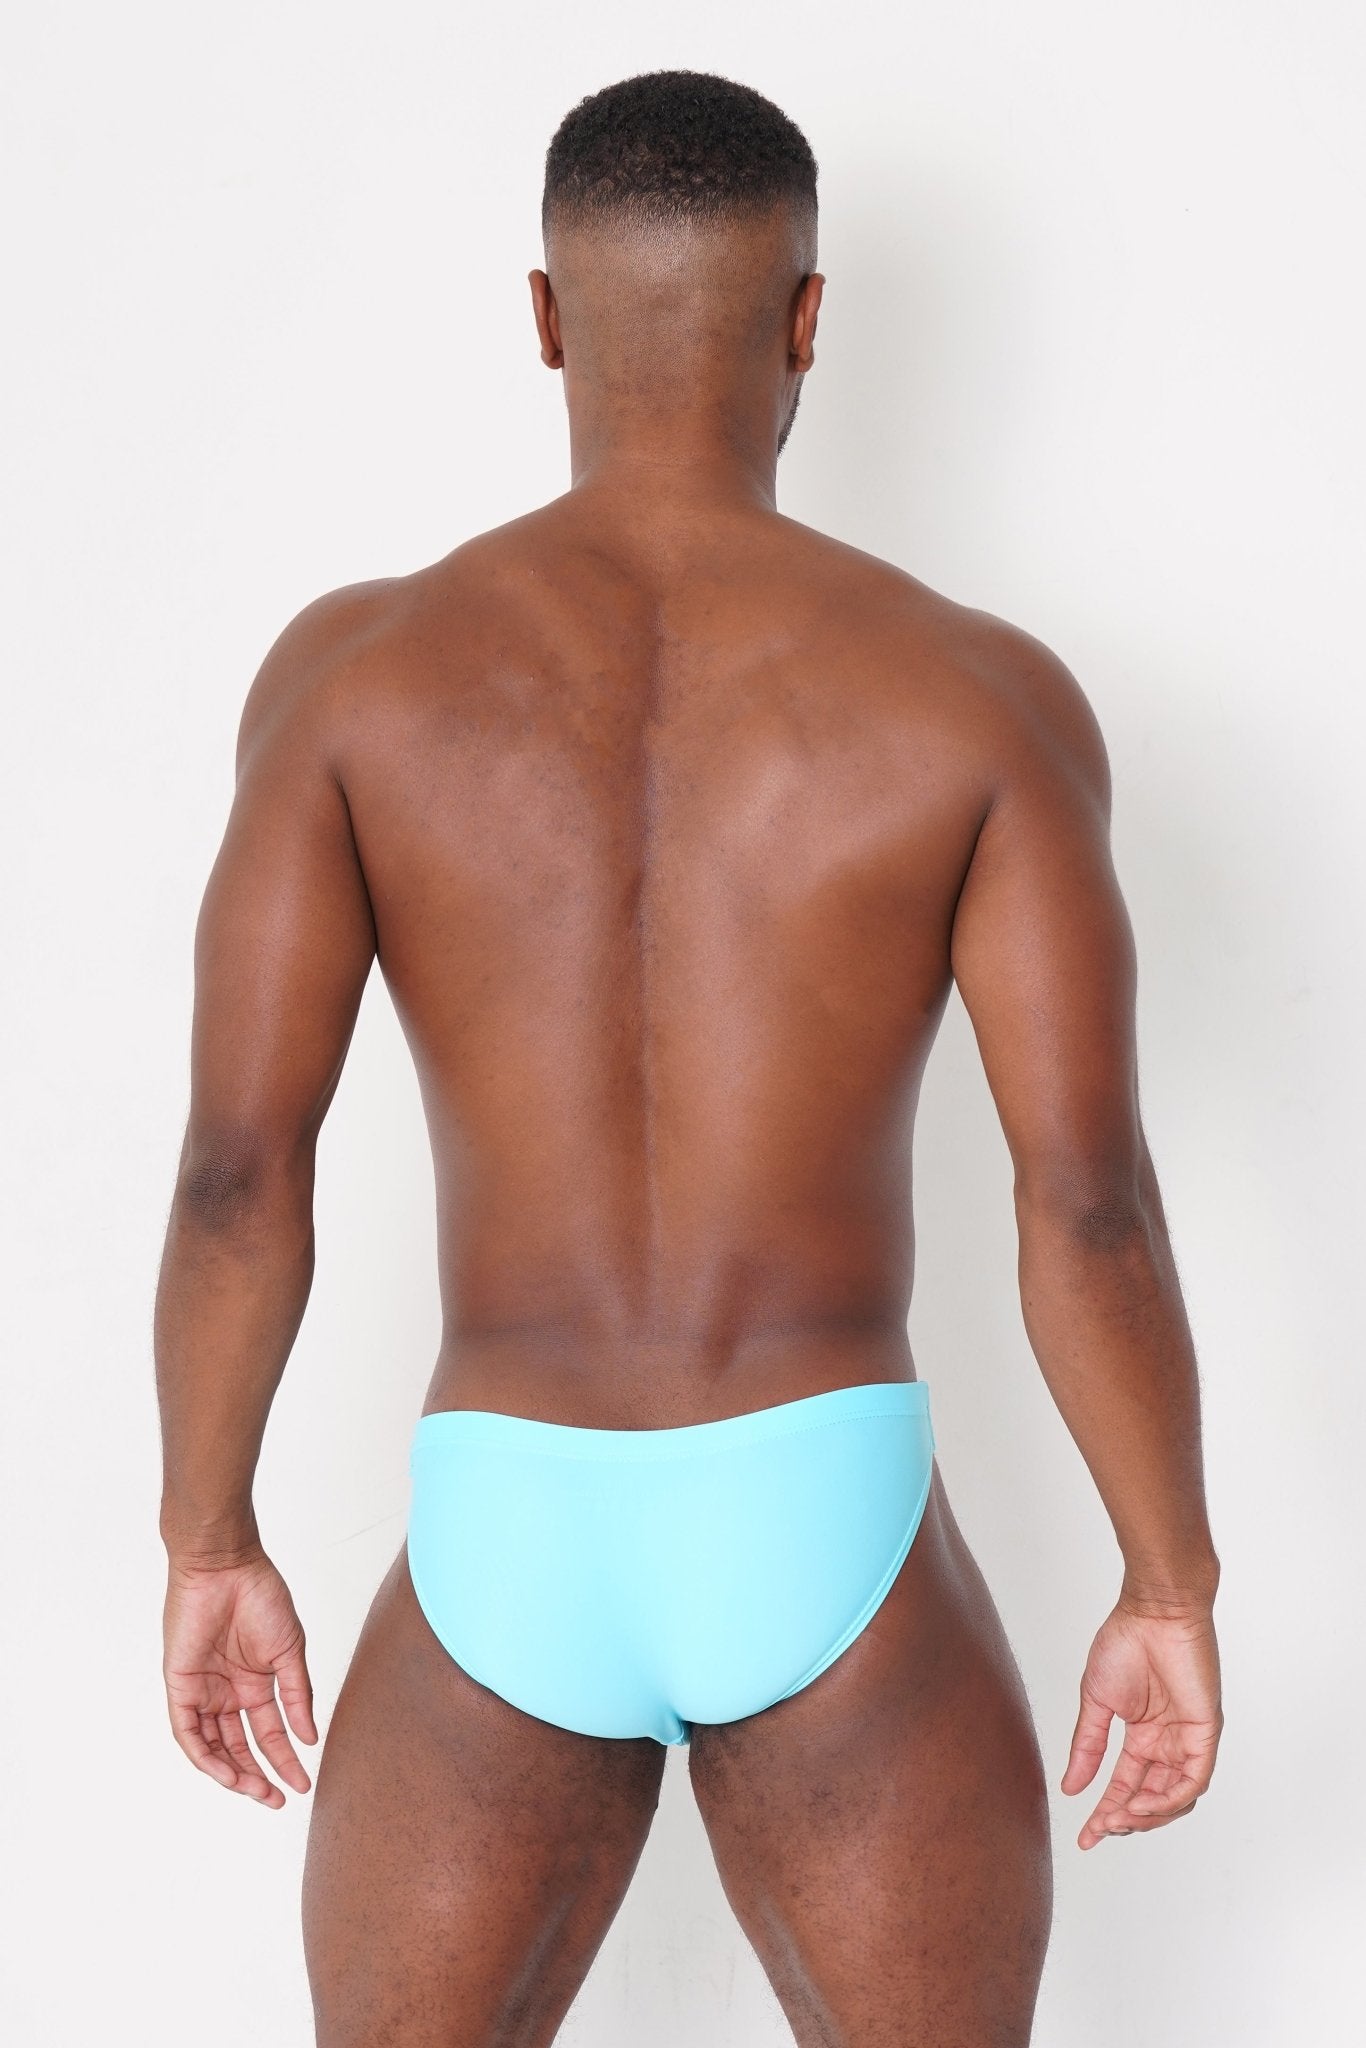 Electric Blue Hybrid Brief Gay men's underwear, Men's briefs, LGBTQ+ underwear, Men's lingerie, Sexy men's underwear, Comfortable men's underwear, Men's swimwear